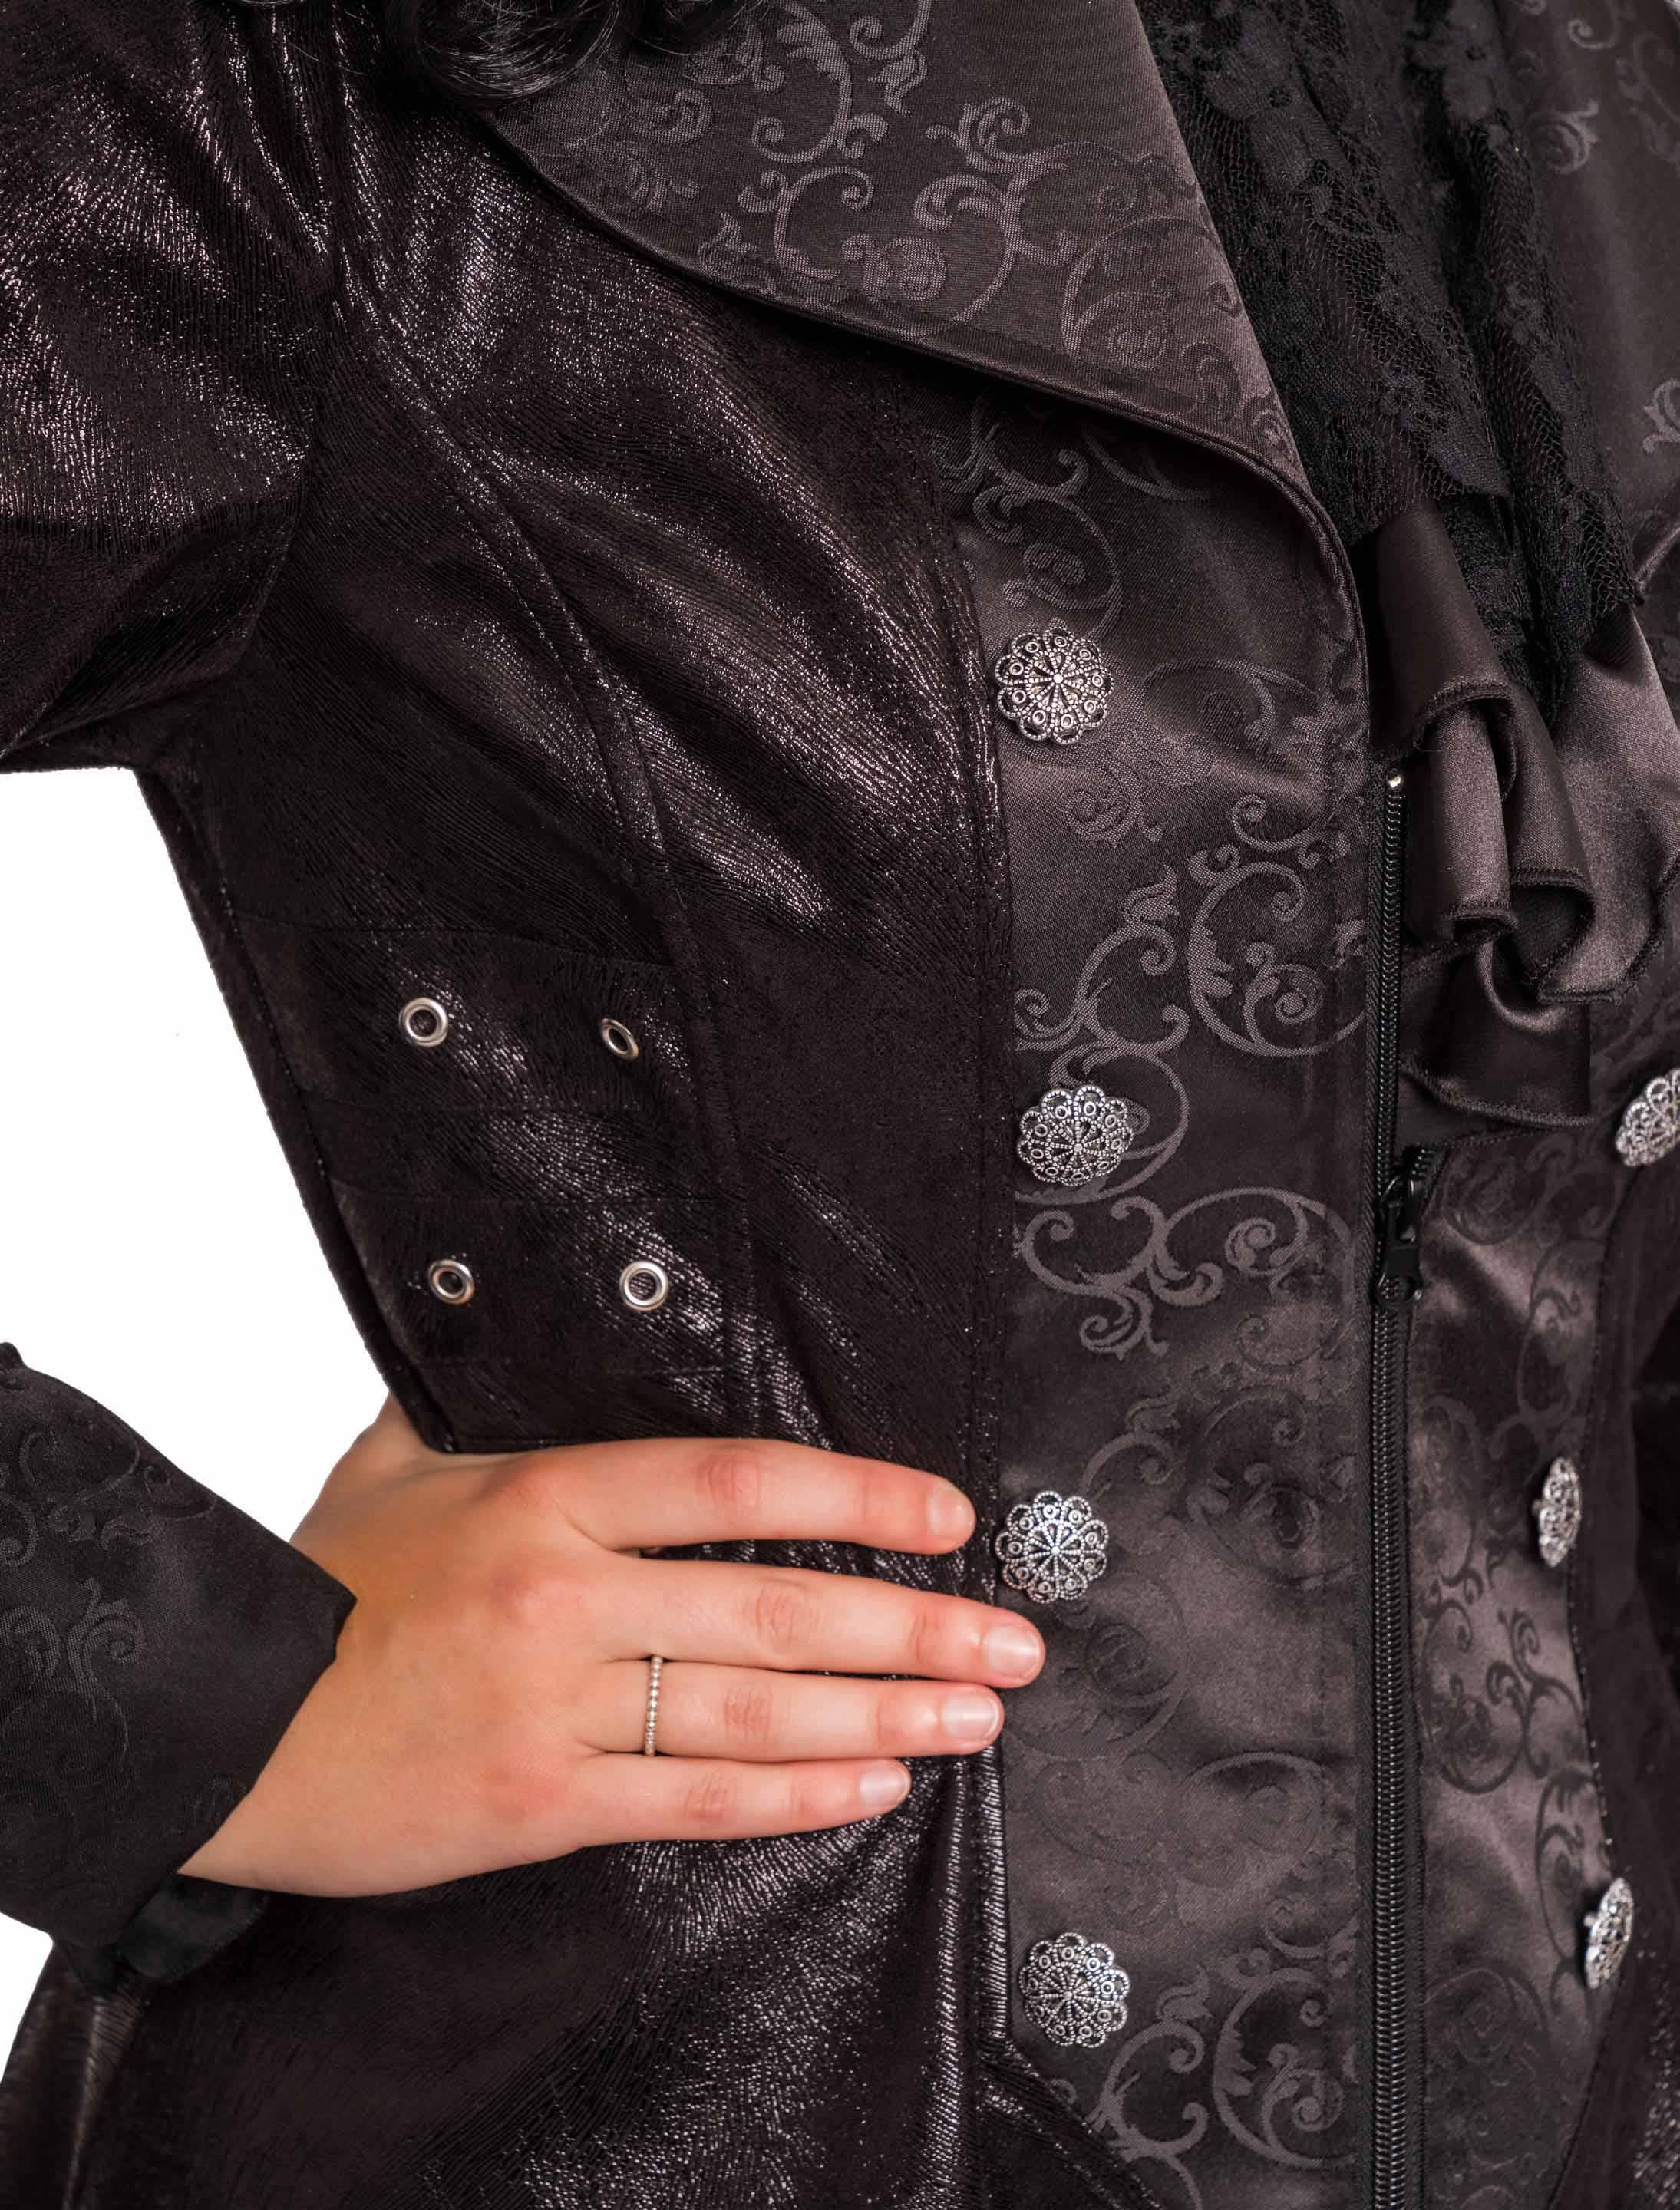 Mantel Steampunk Damen schwarz 5XL